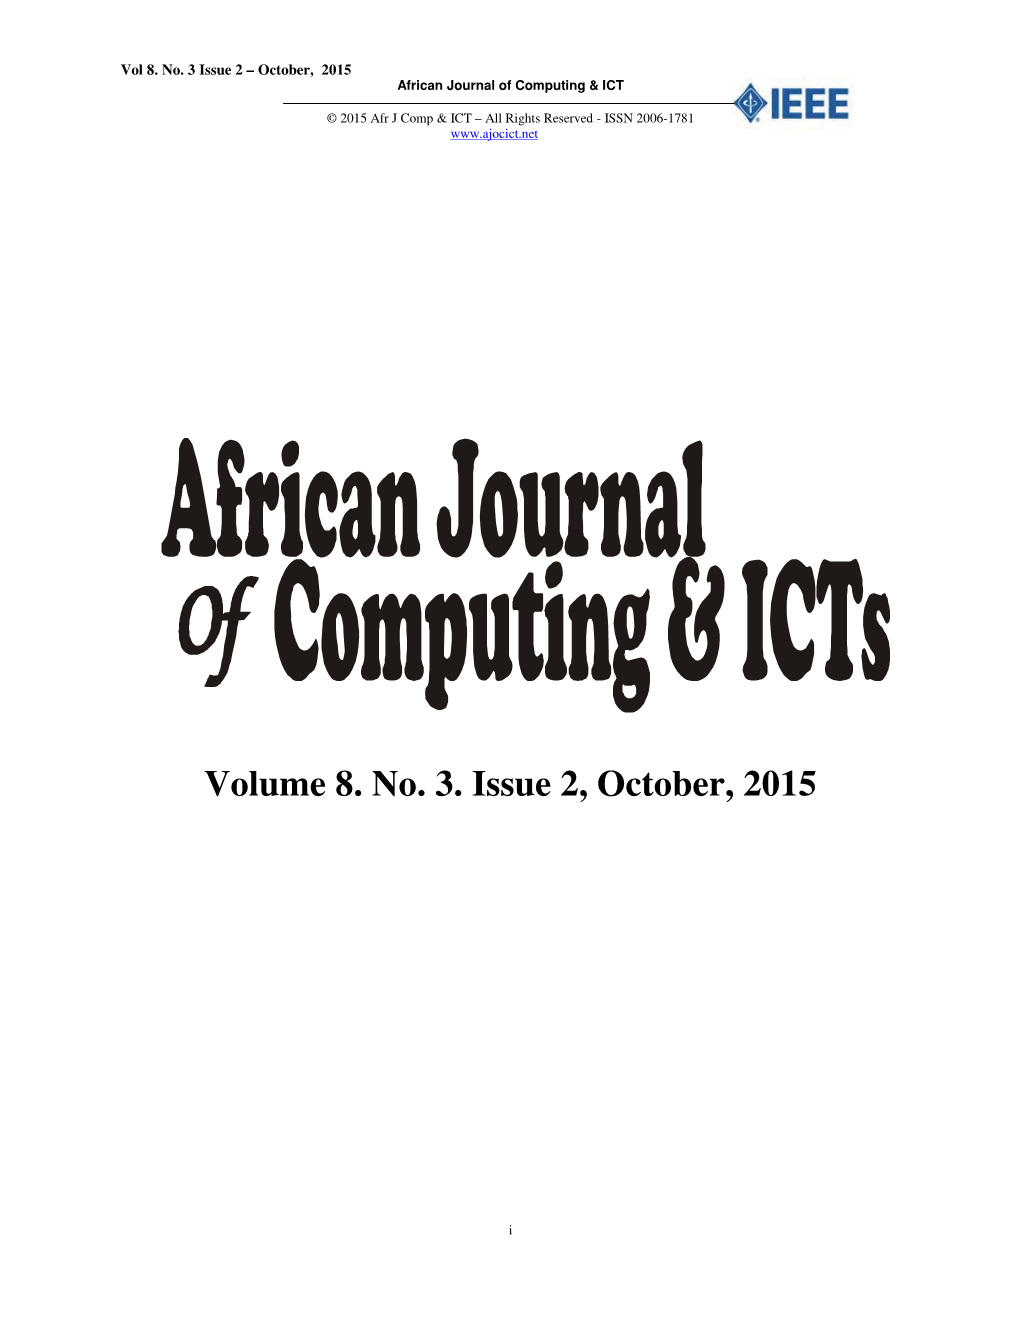 Vol. 8, No. 3, Issue 2, October 2015